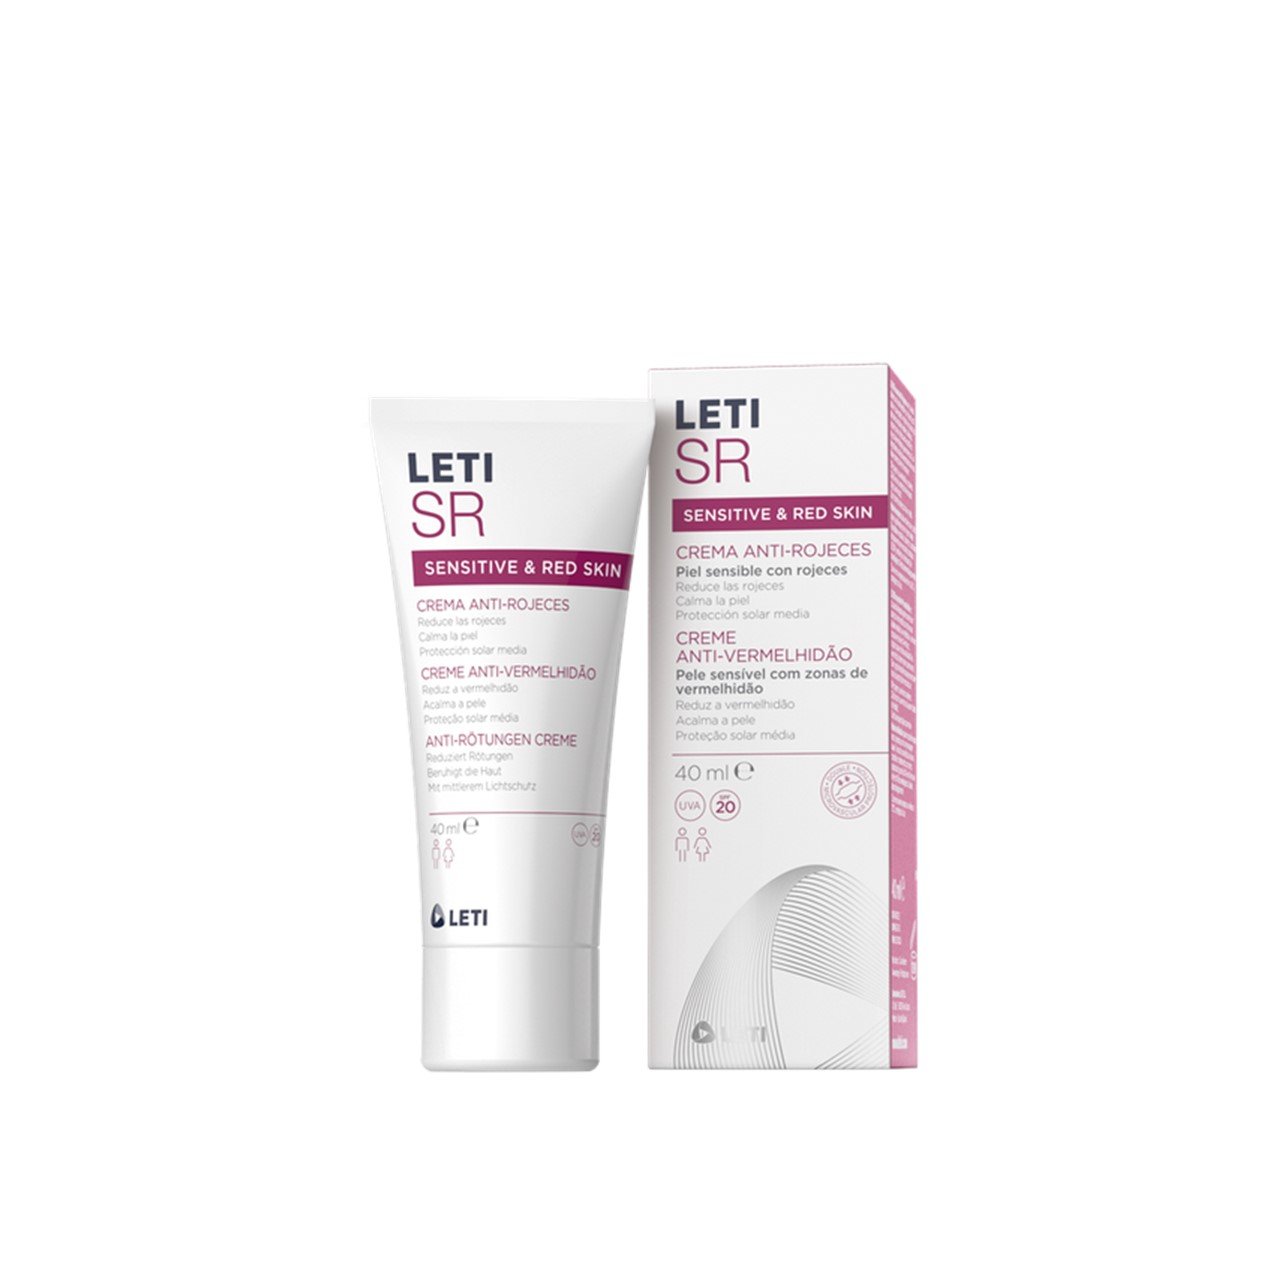 LETI SR Sensitive & Red Skin Anti-Redness Cream SPF20 40ml (1.35fl oz)